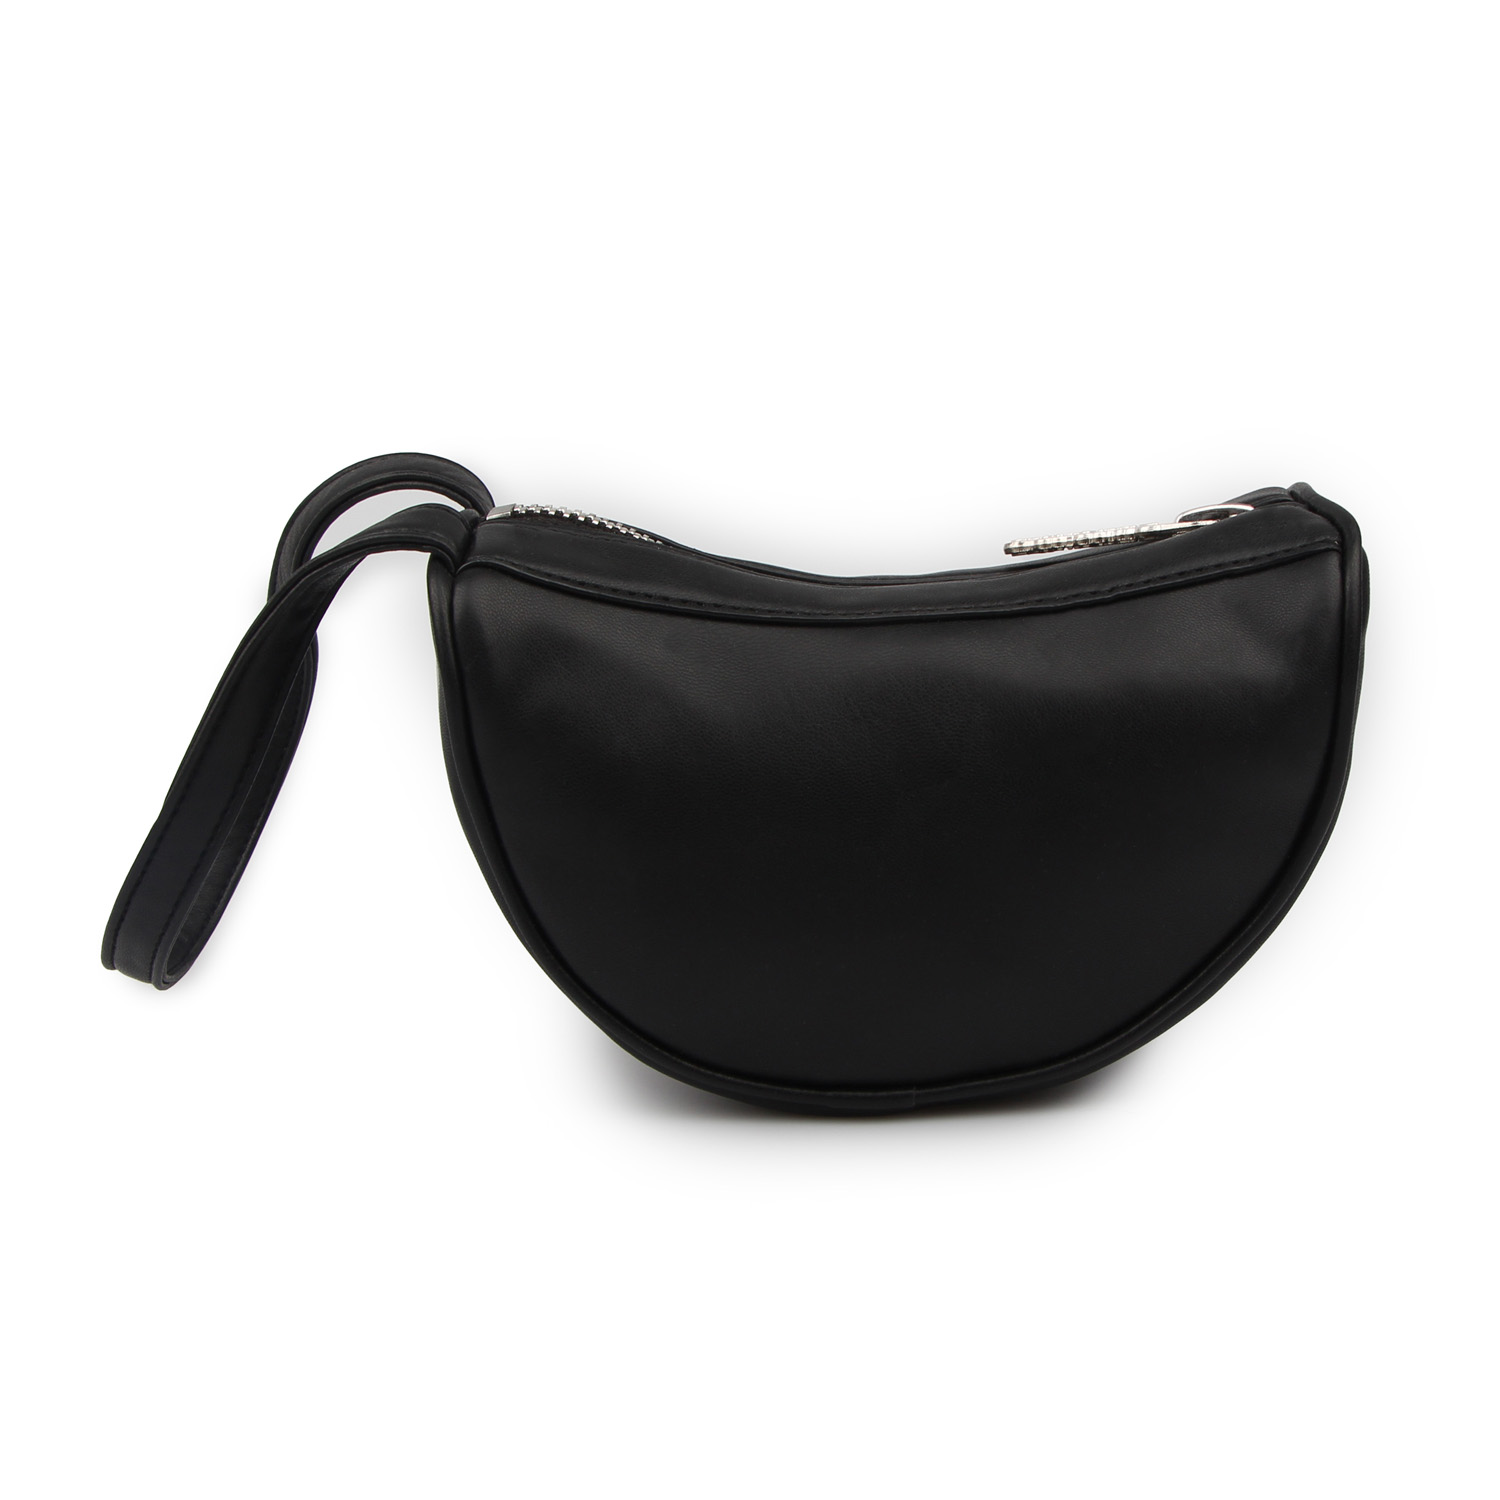 HX019 Small Trendy Cute Hobo ladybag Clutch Handbag Pocketbook Vegan Leather with Zipper Ladies Purse